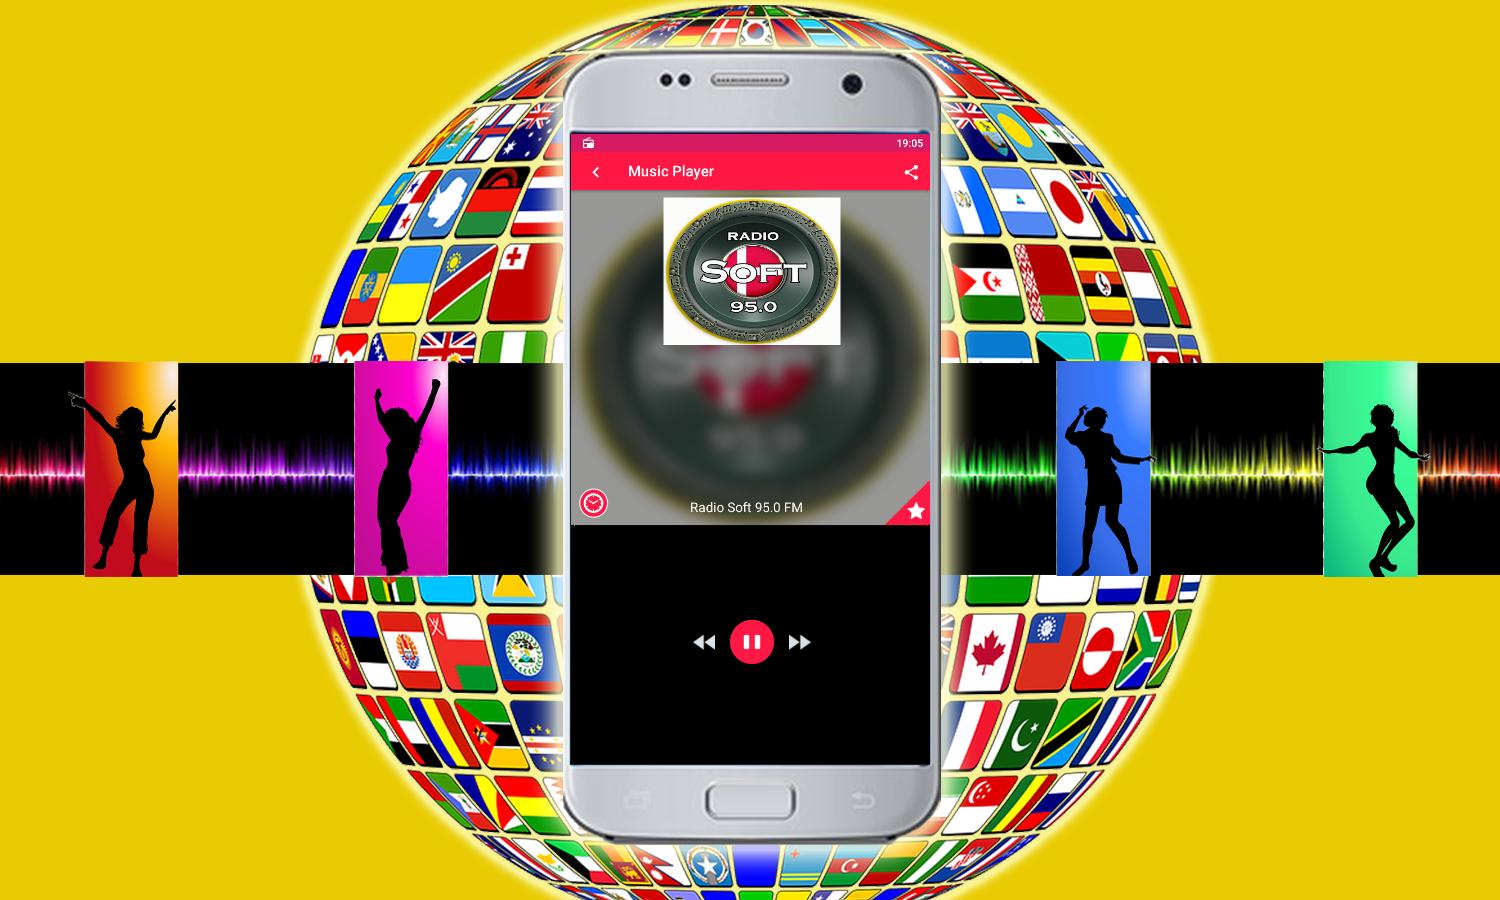 Radio Soft 95.0 FM Radio Danmark Netradio Online for Android - APK Download